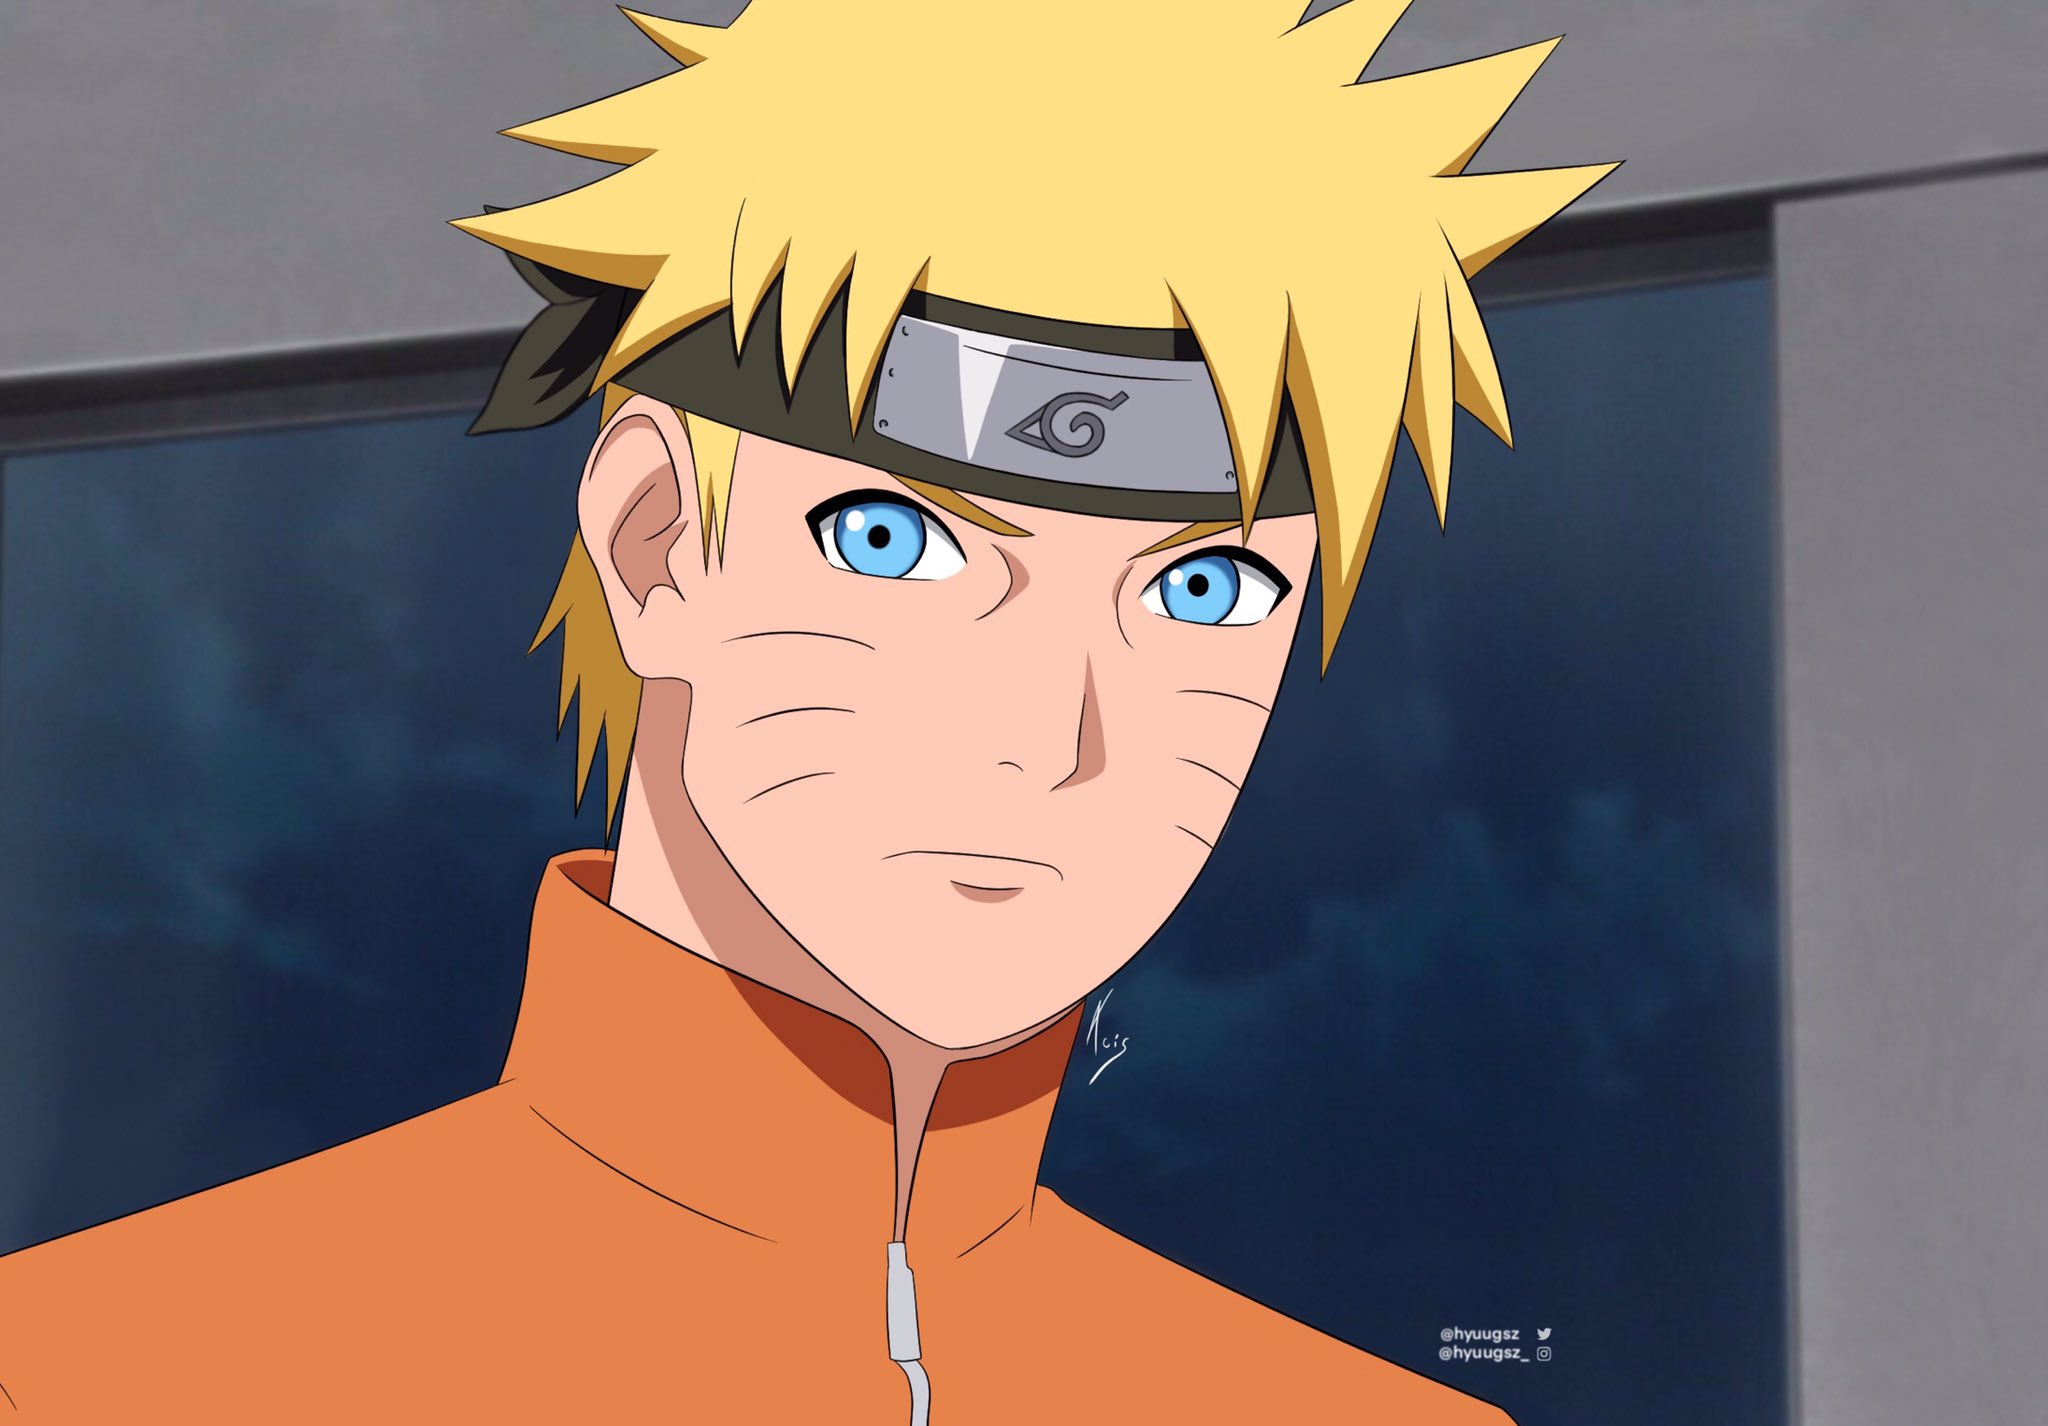 Naruto - Artista imaginou como seria o visual adulto da Sarada